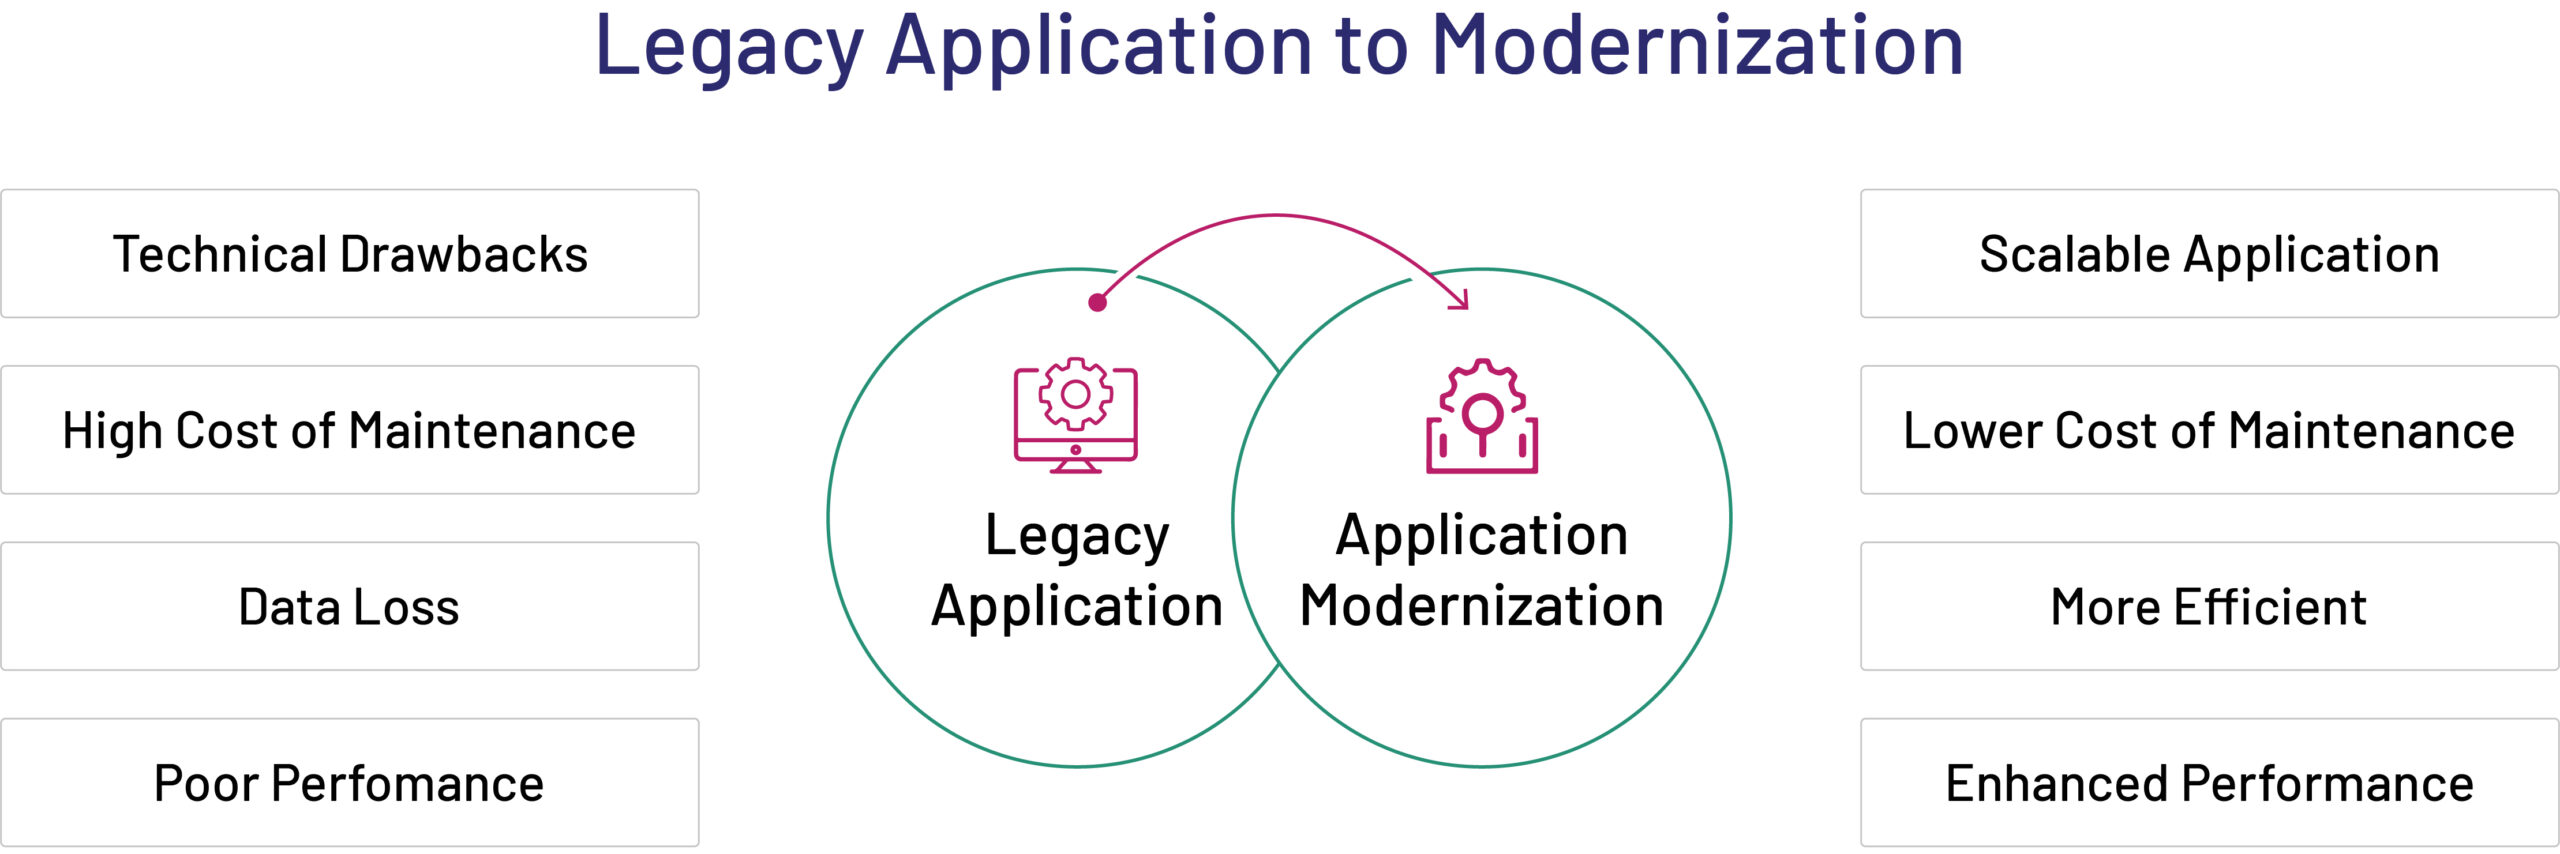 Legacy Application to Modernization